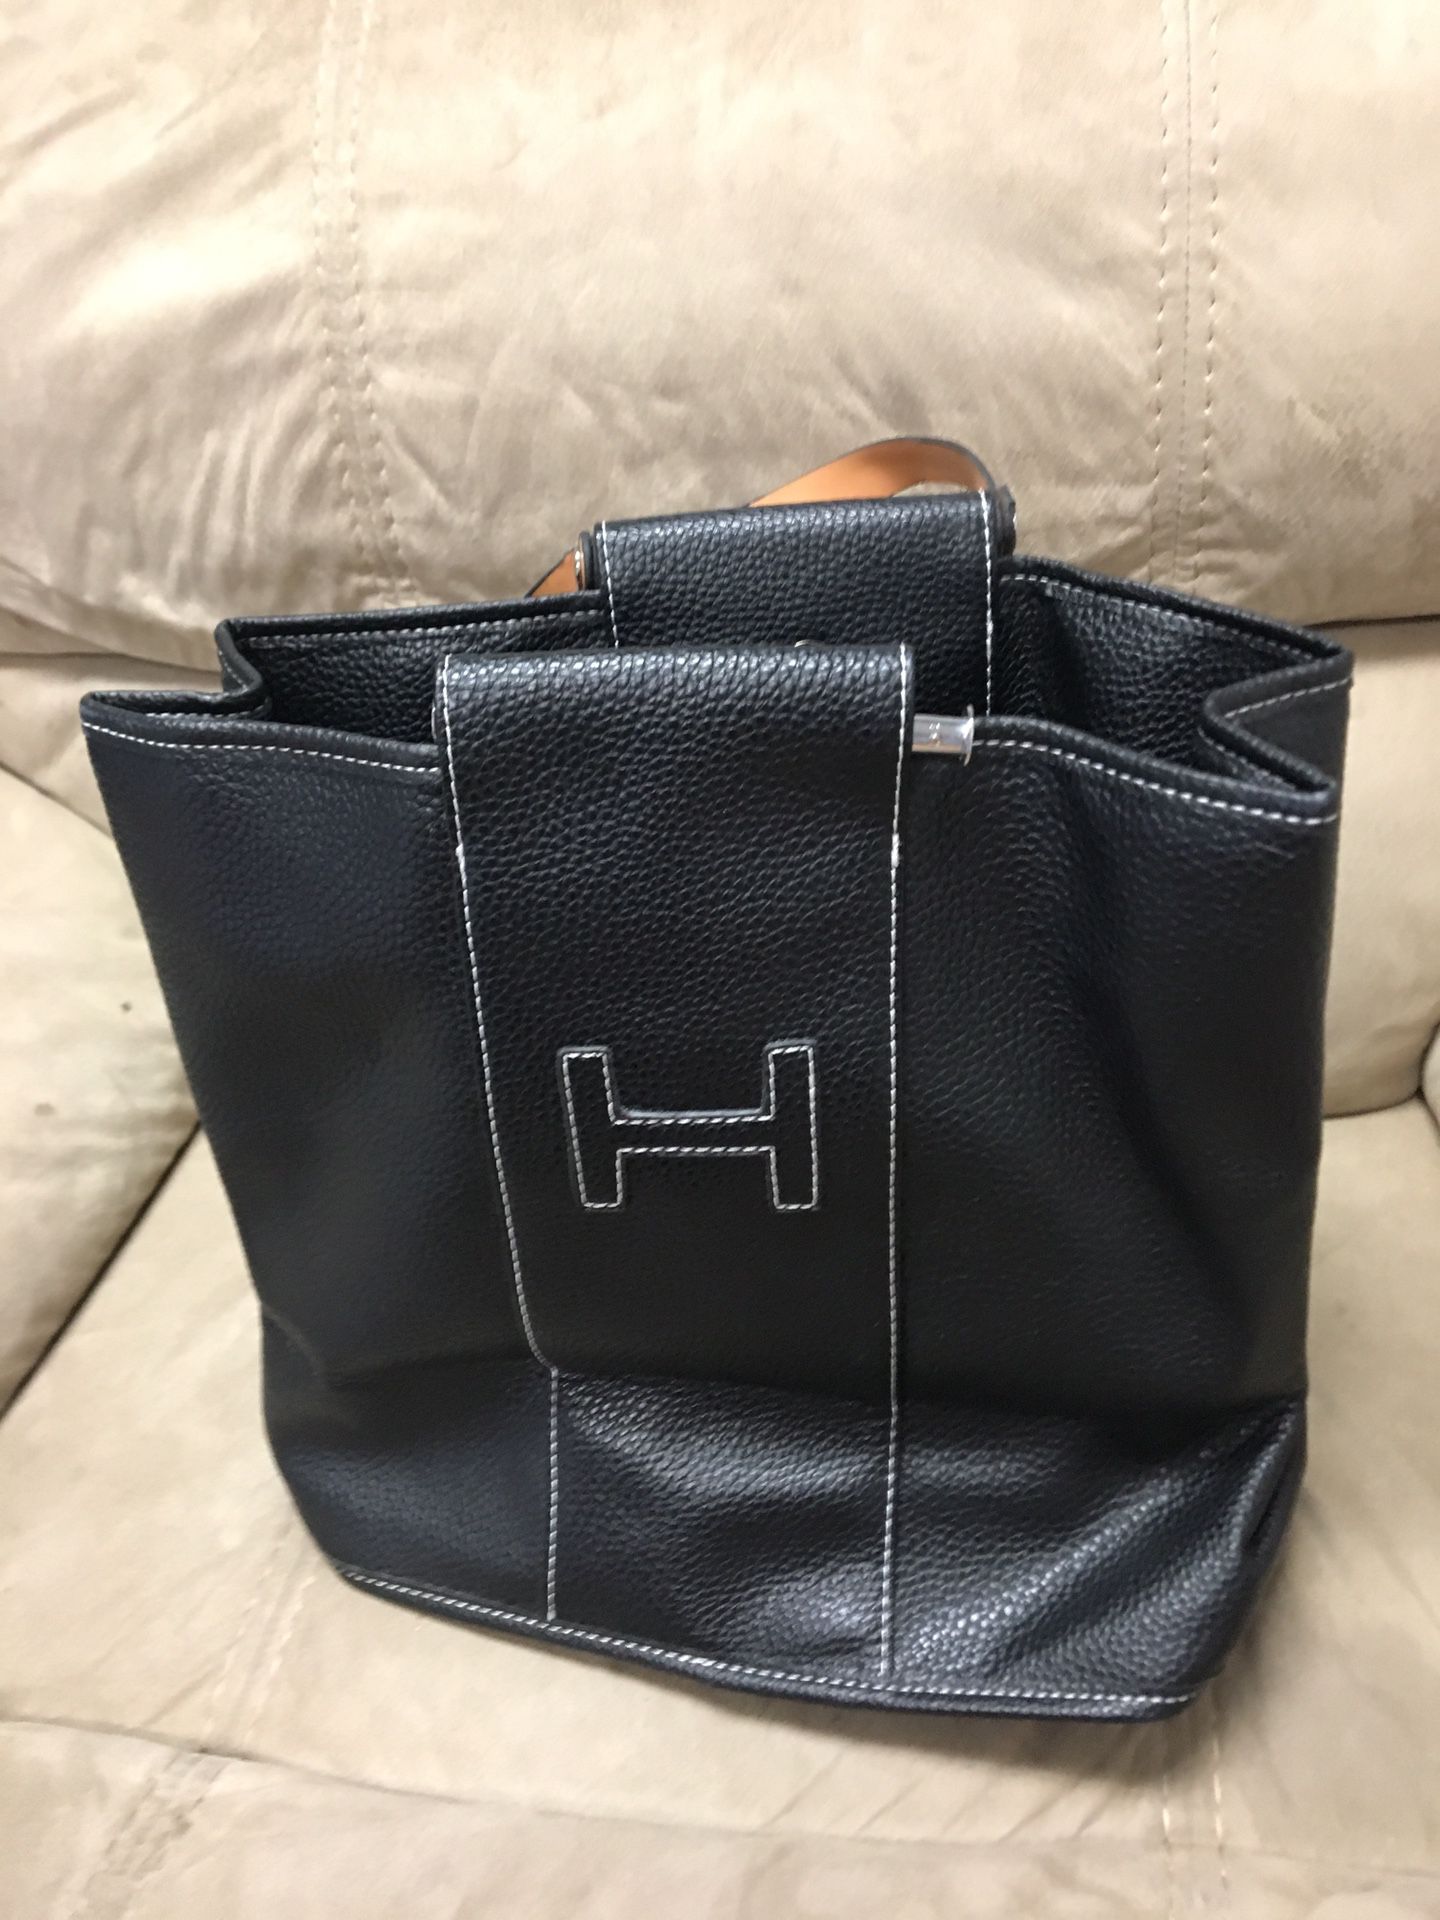 Hermes womens bag